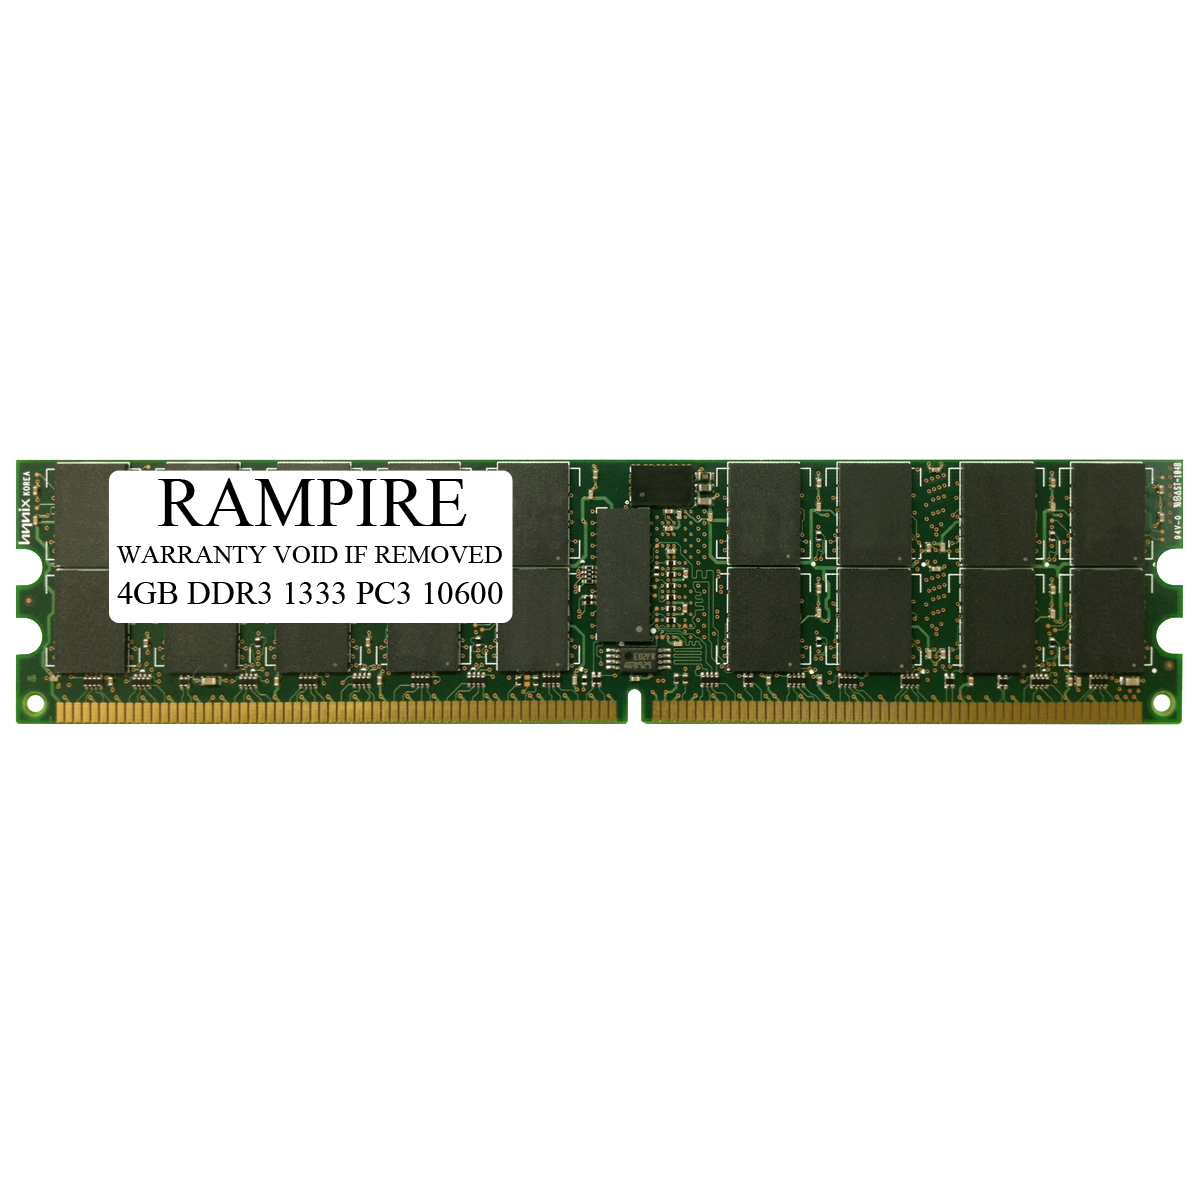 RAMPIRE 4GB DDR3 1333 (PC3 10600) 240-Pin SDRAM 1Rx4 Standard Profile 1.5V ECC Registered Server Memory